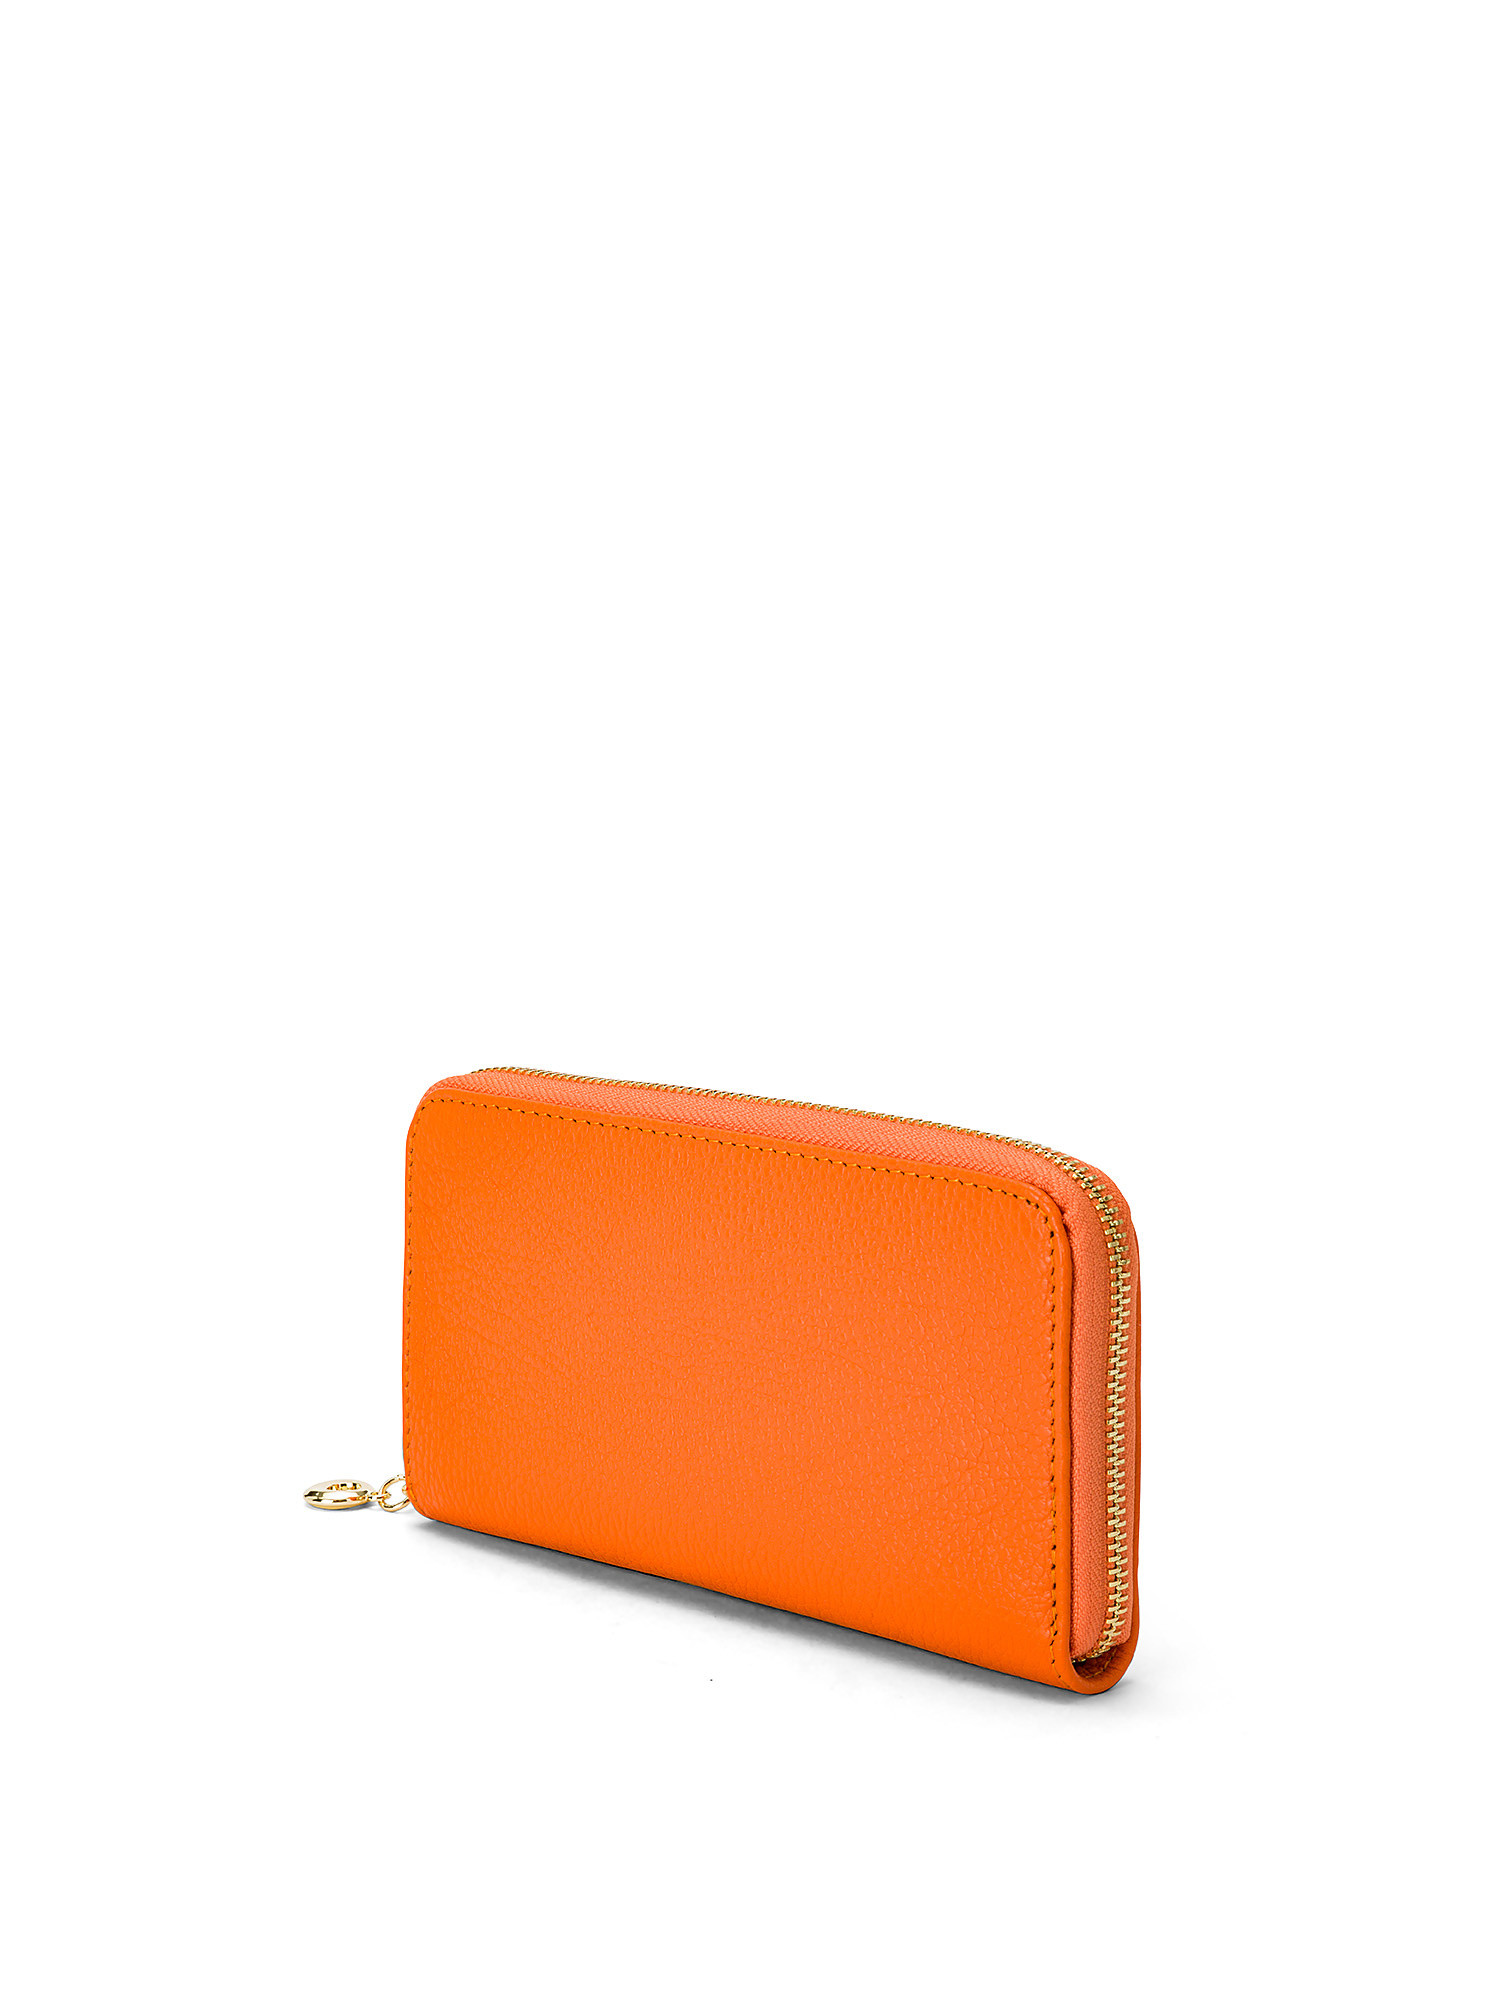 Koan - Genuine leather wallet with zip, Orange, large image number 1